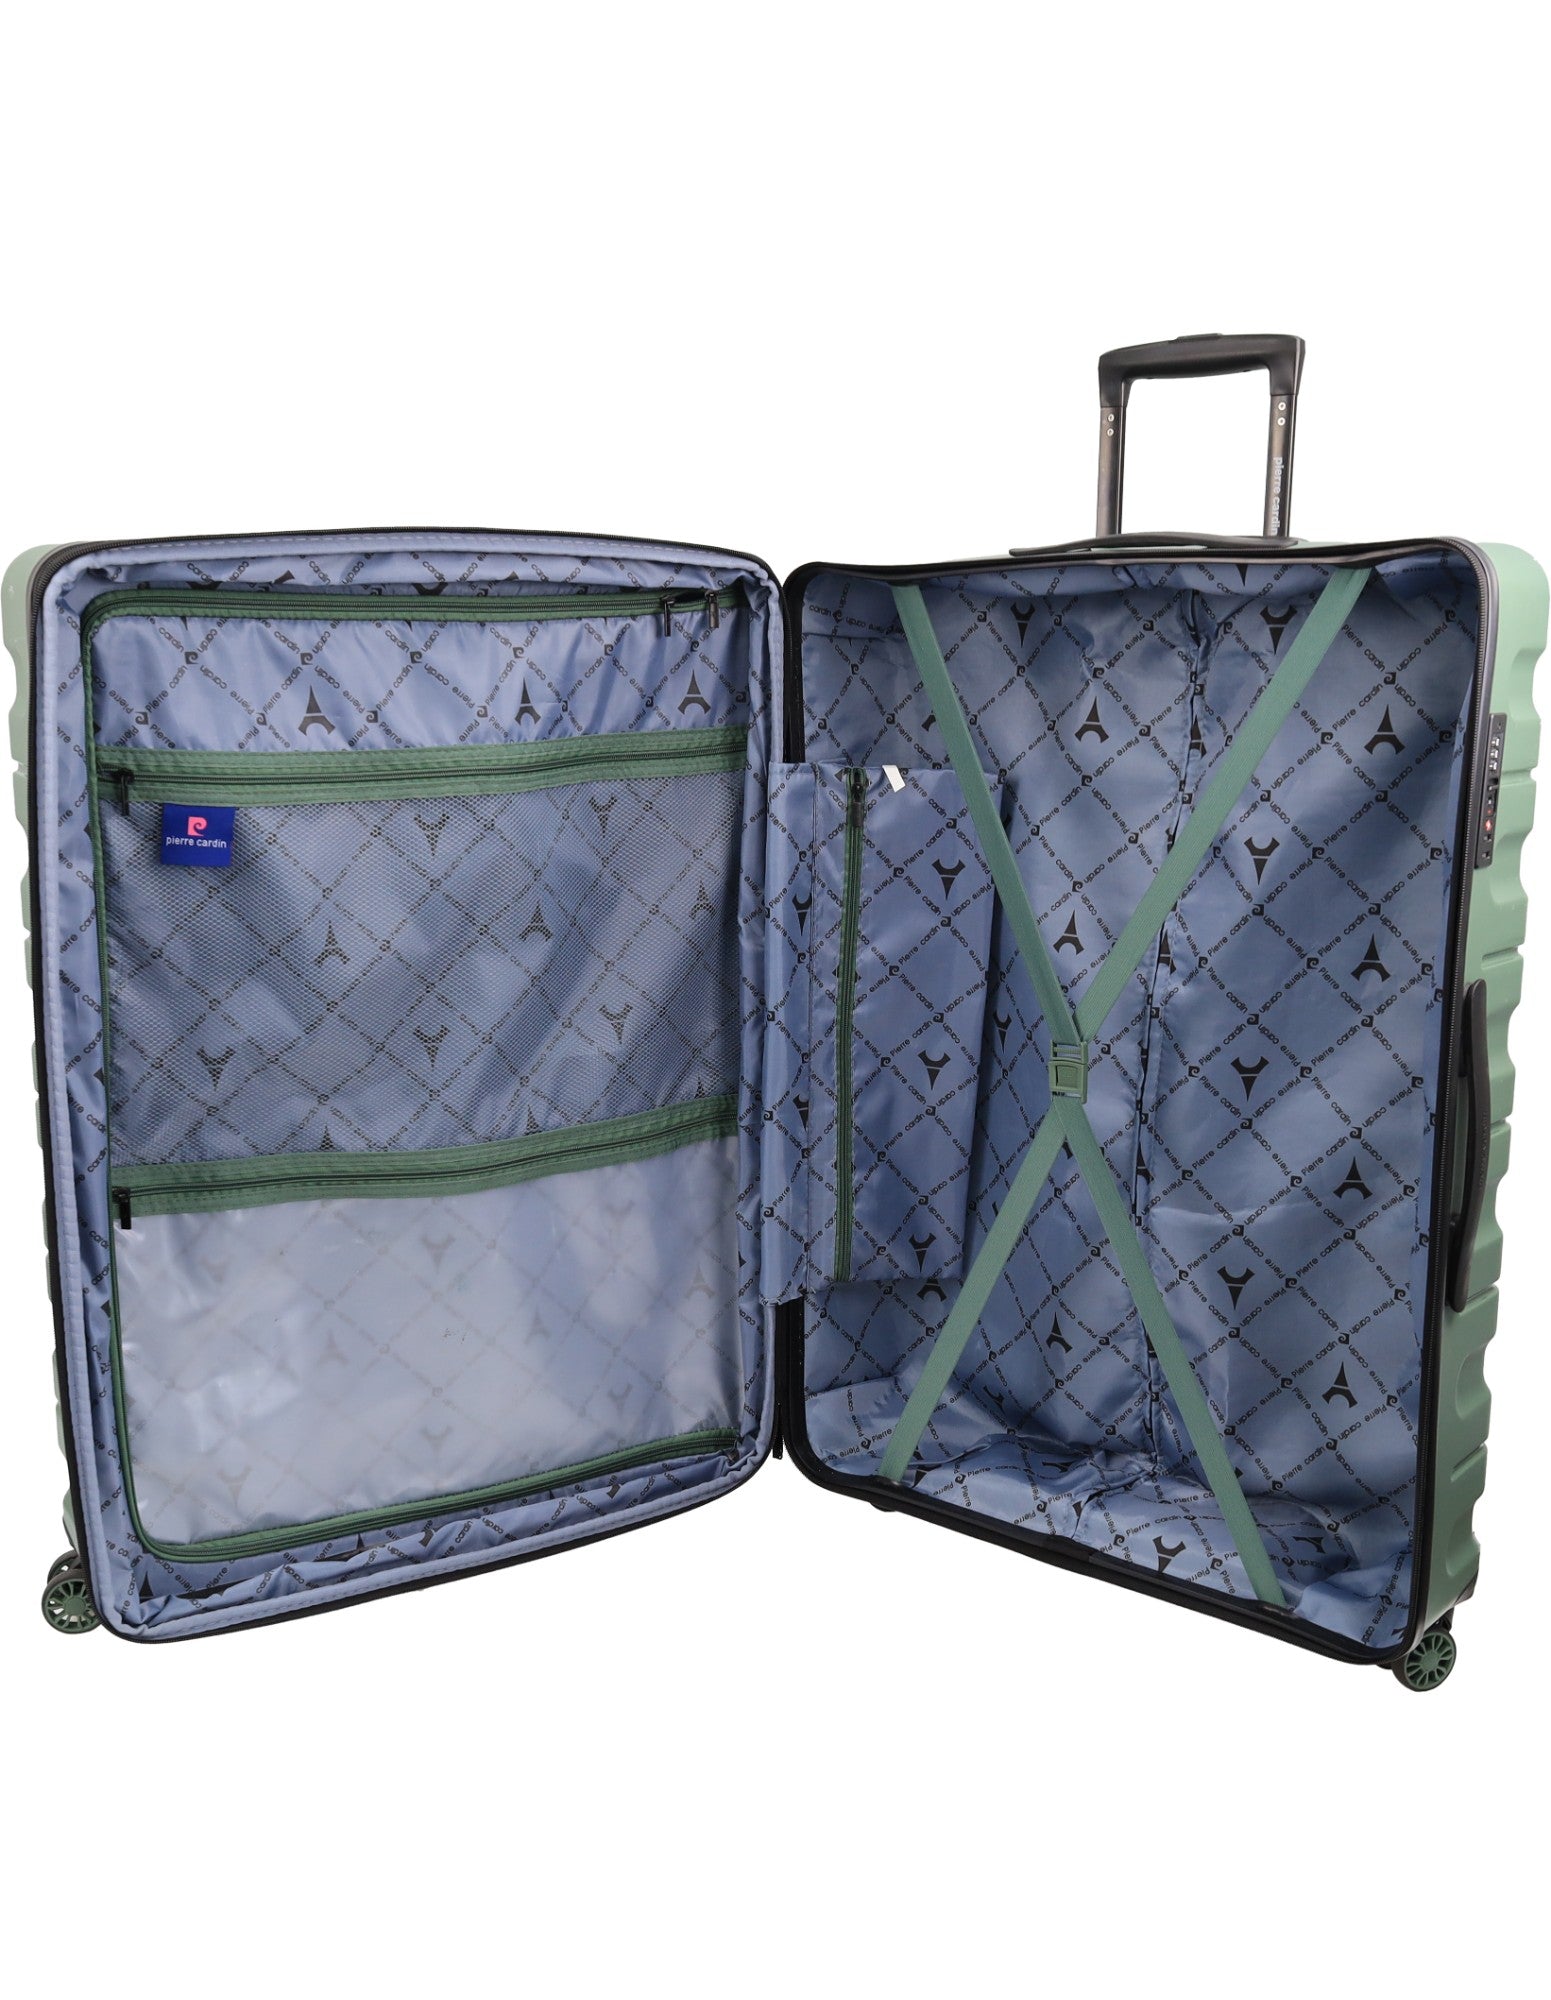 Pierre Cardin 70cm MEDIUM Hard Shell Suitcase in Moss